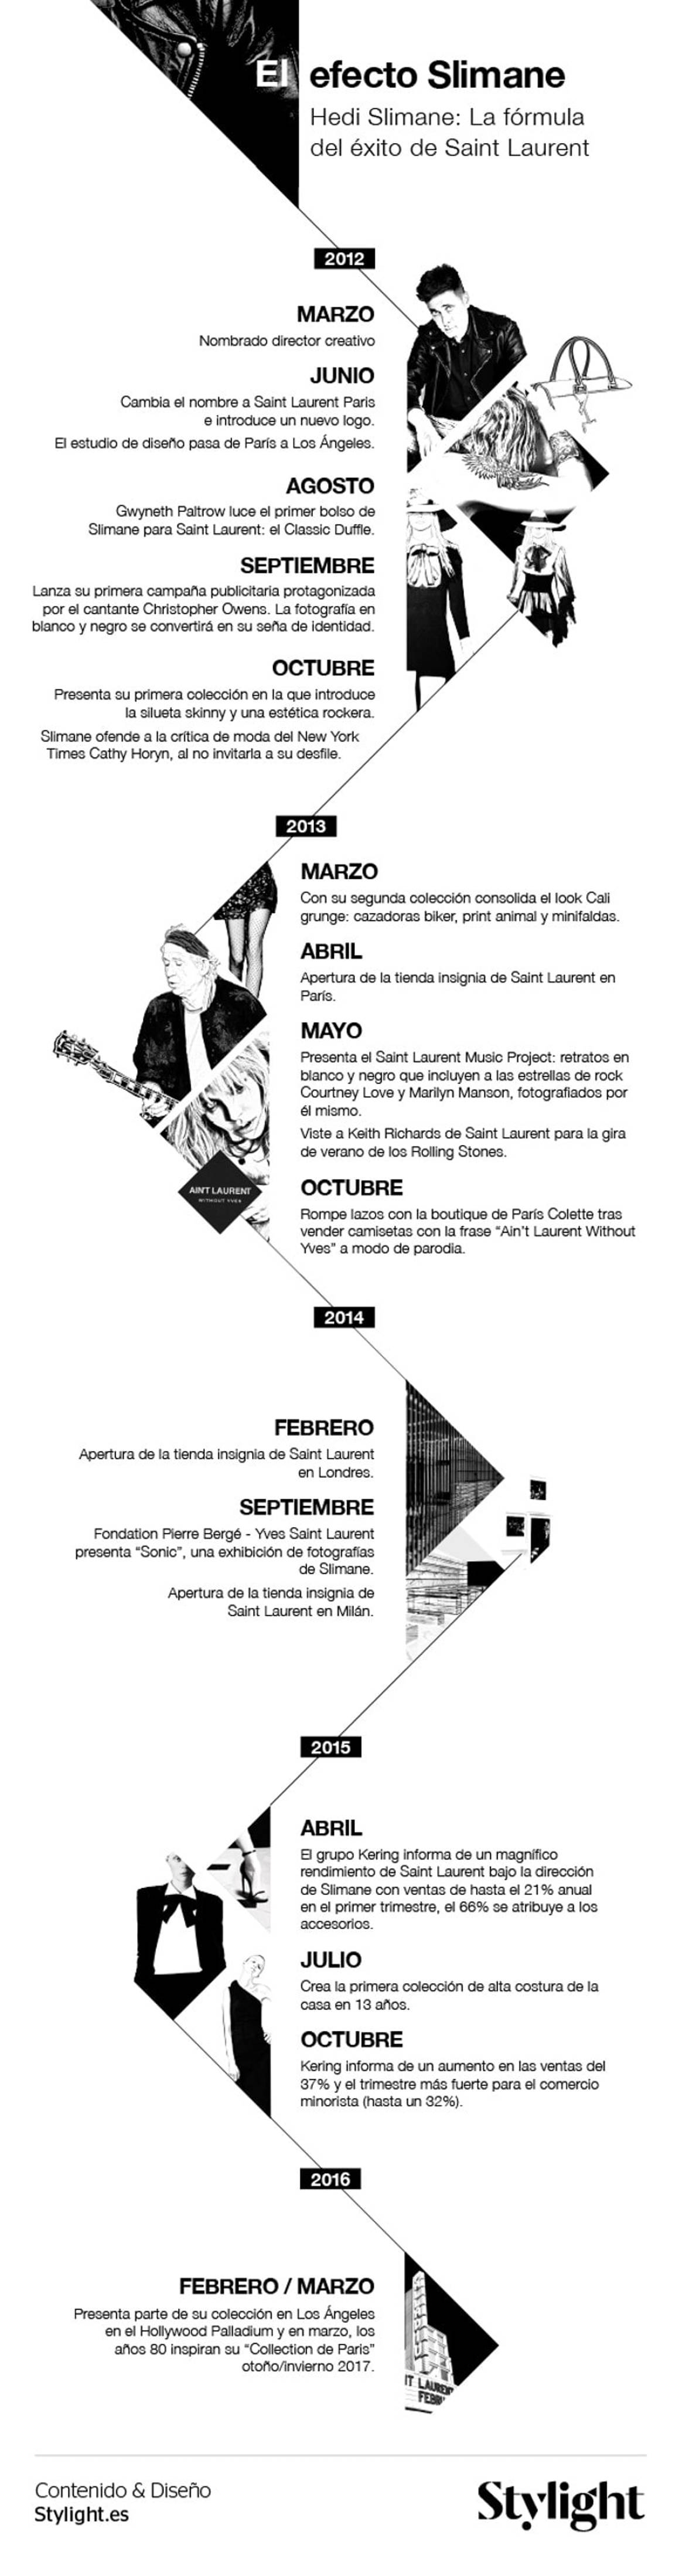 Infografía - Hedi Slimane se marcha de YSL, el efecto Slimane